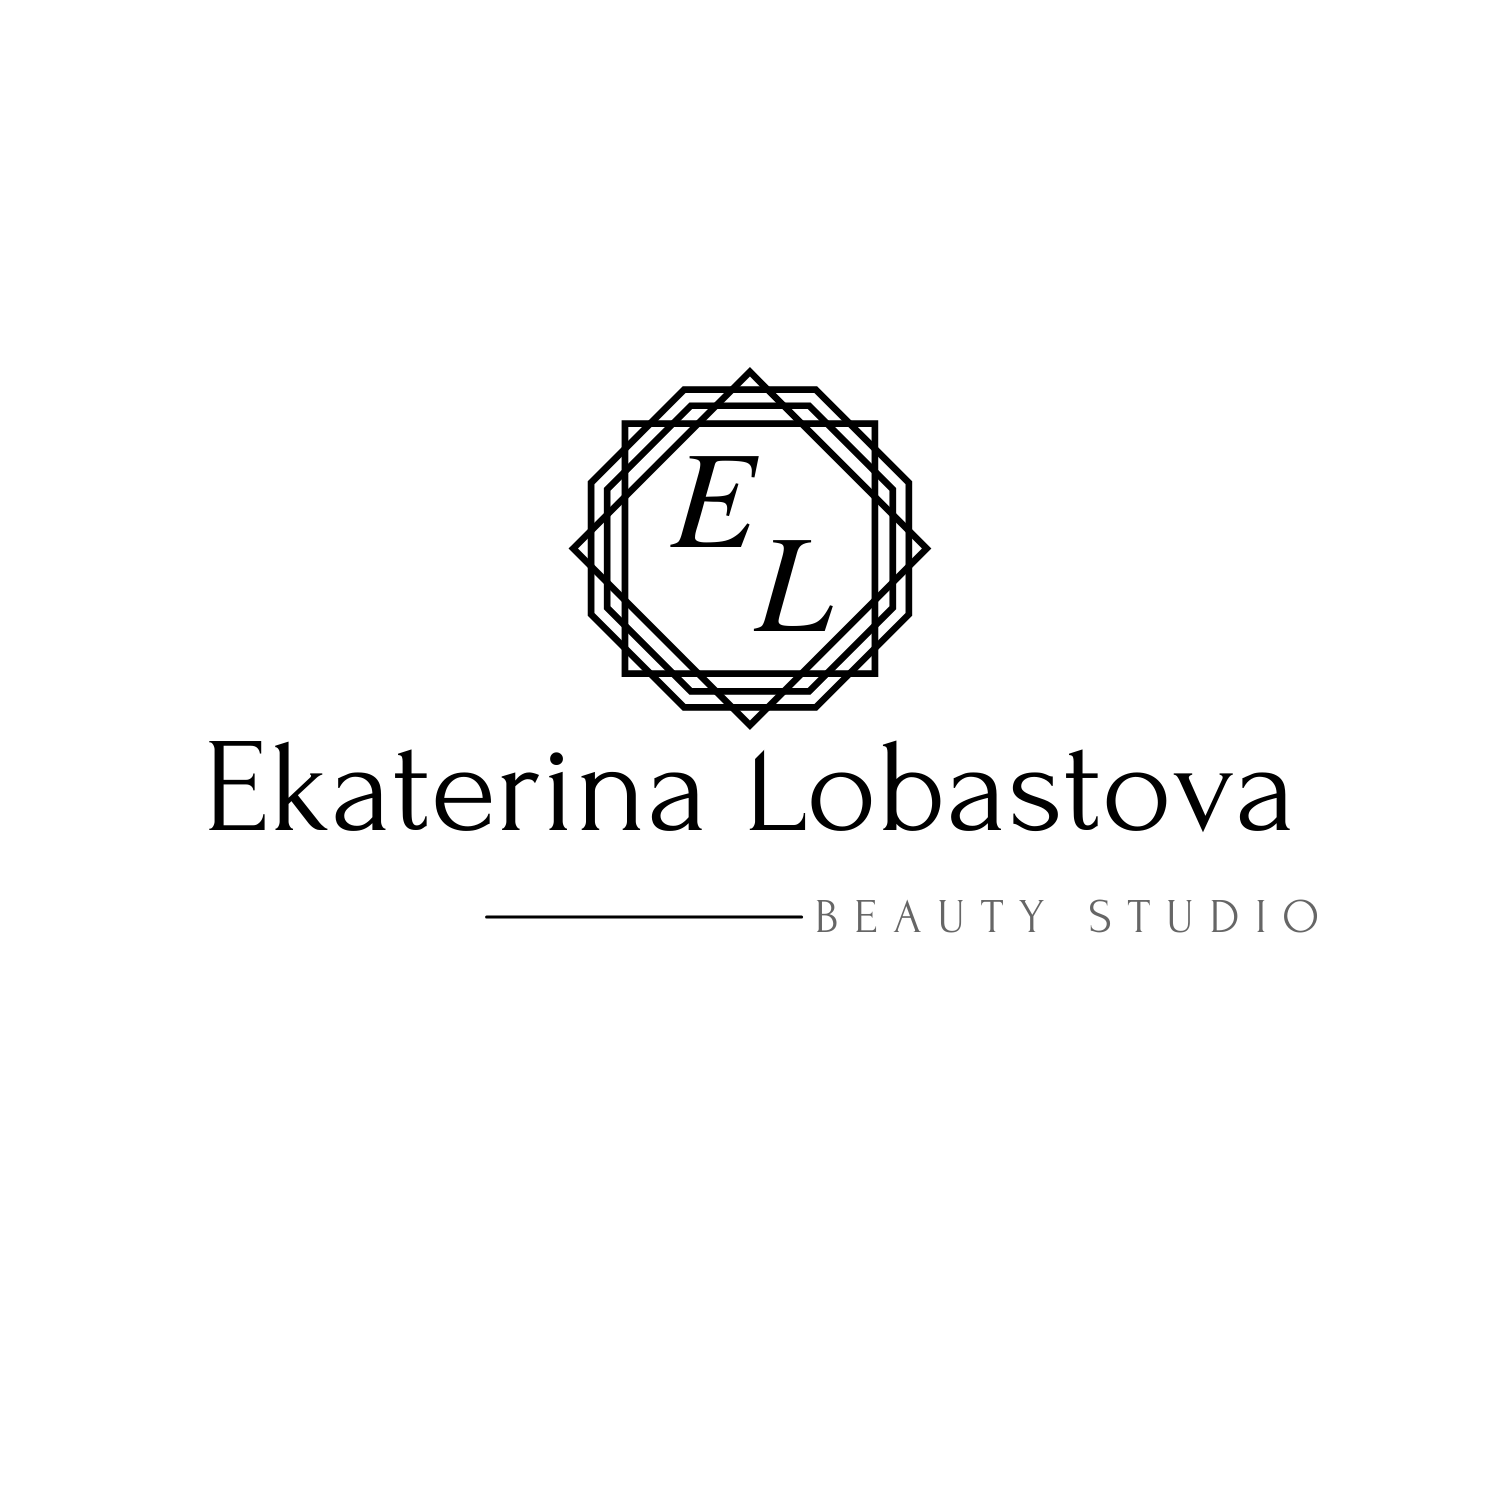 Ekaterina Lobastova